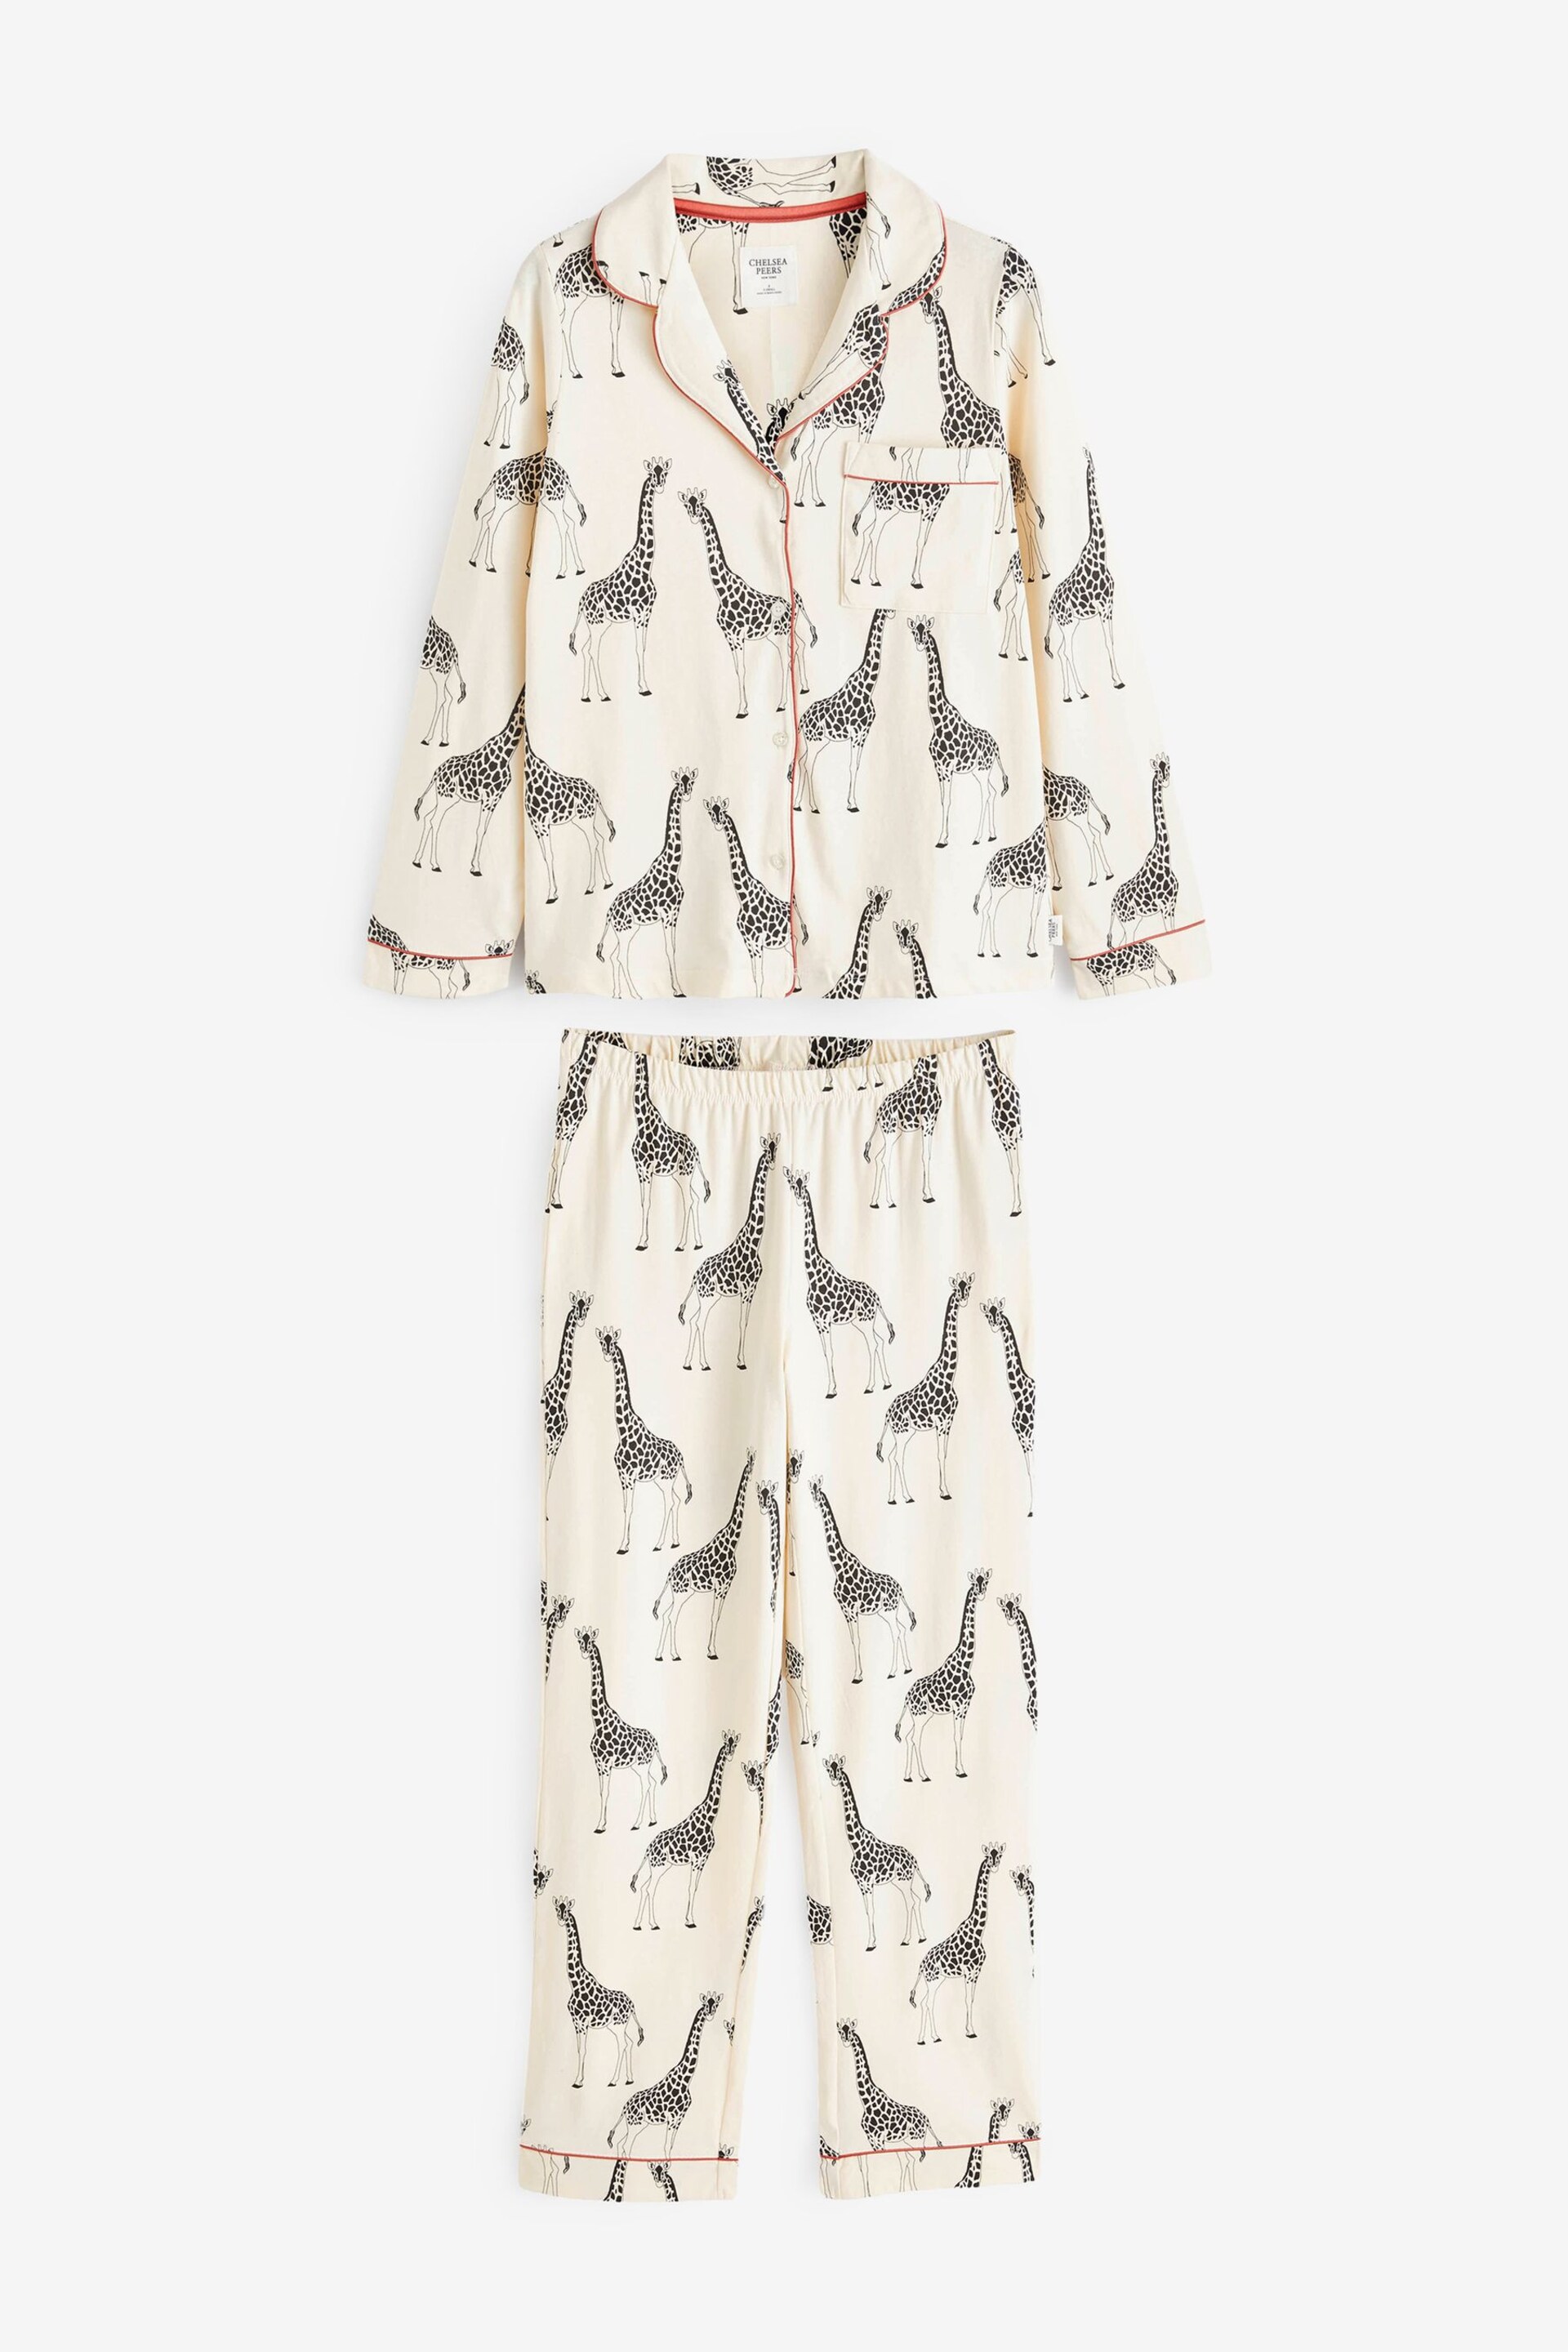 Chelsea Peers Cream Giraffe Button Up Long Pyjama Set - Image 7 of 9